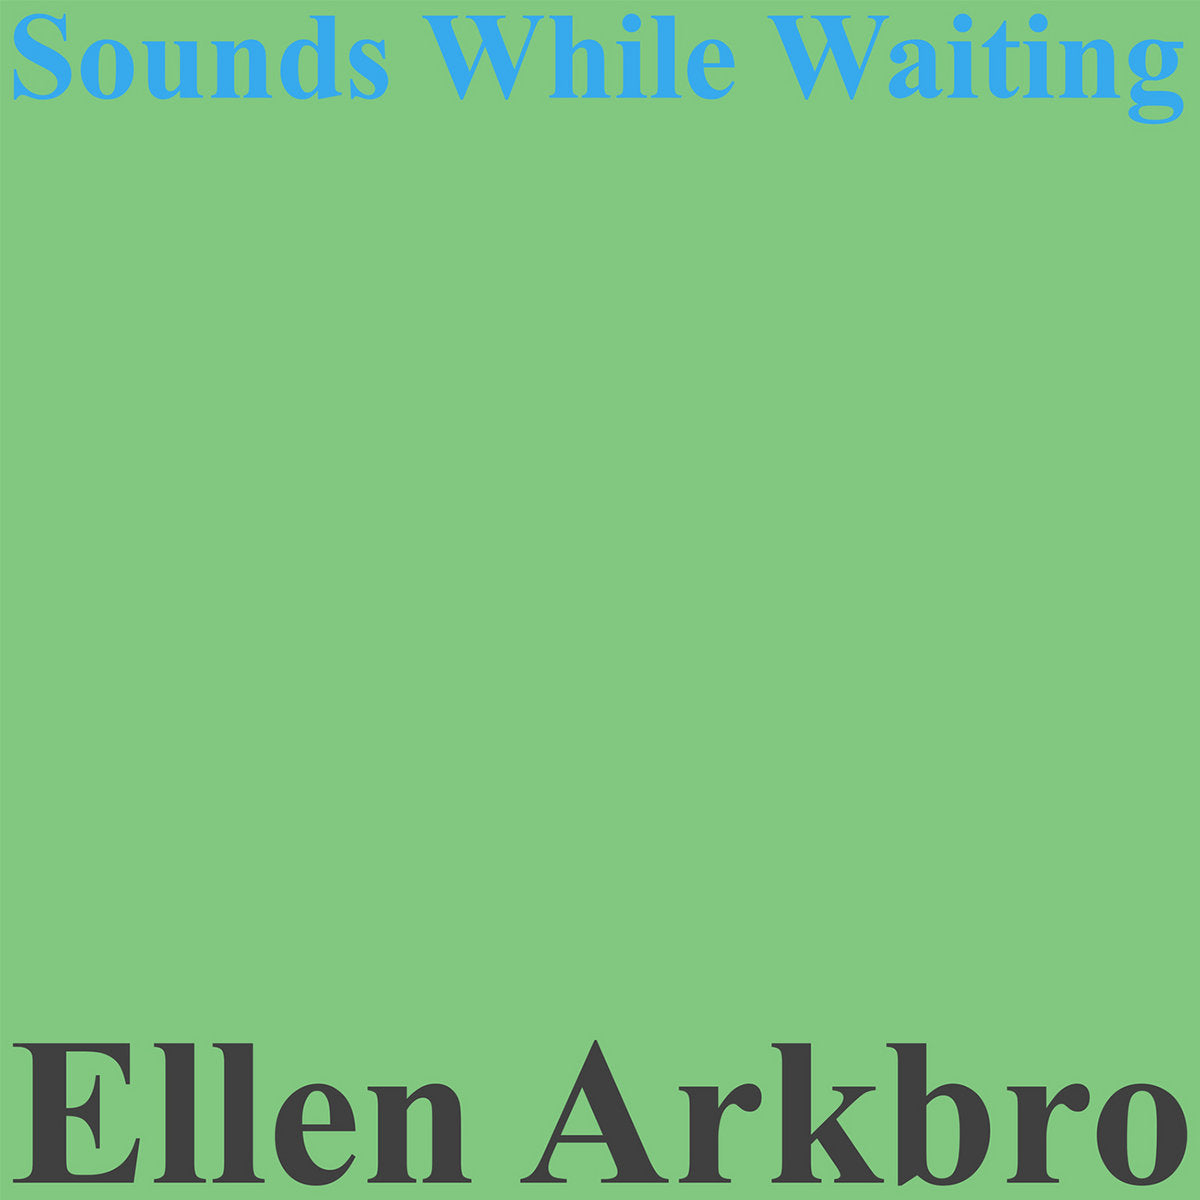 Arcade Sound - Ellen Arkbro - Sounds While Waiting front cover